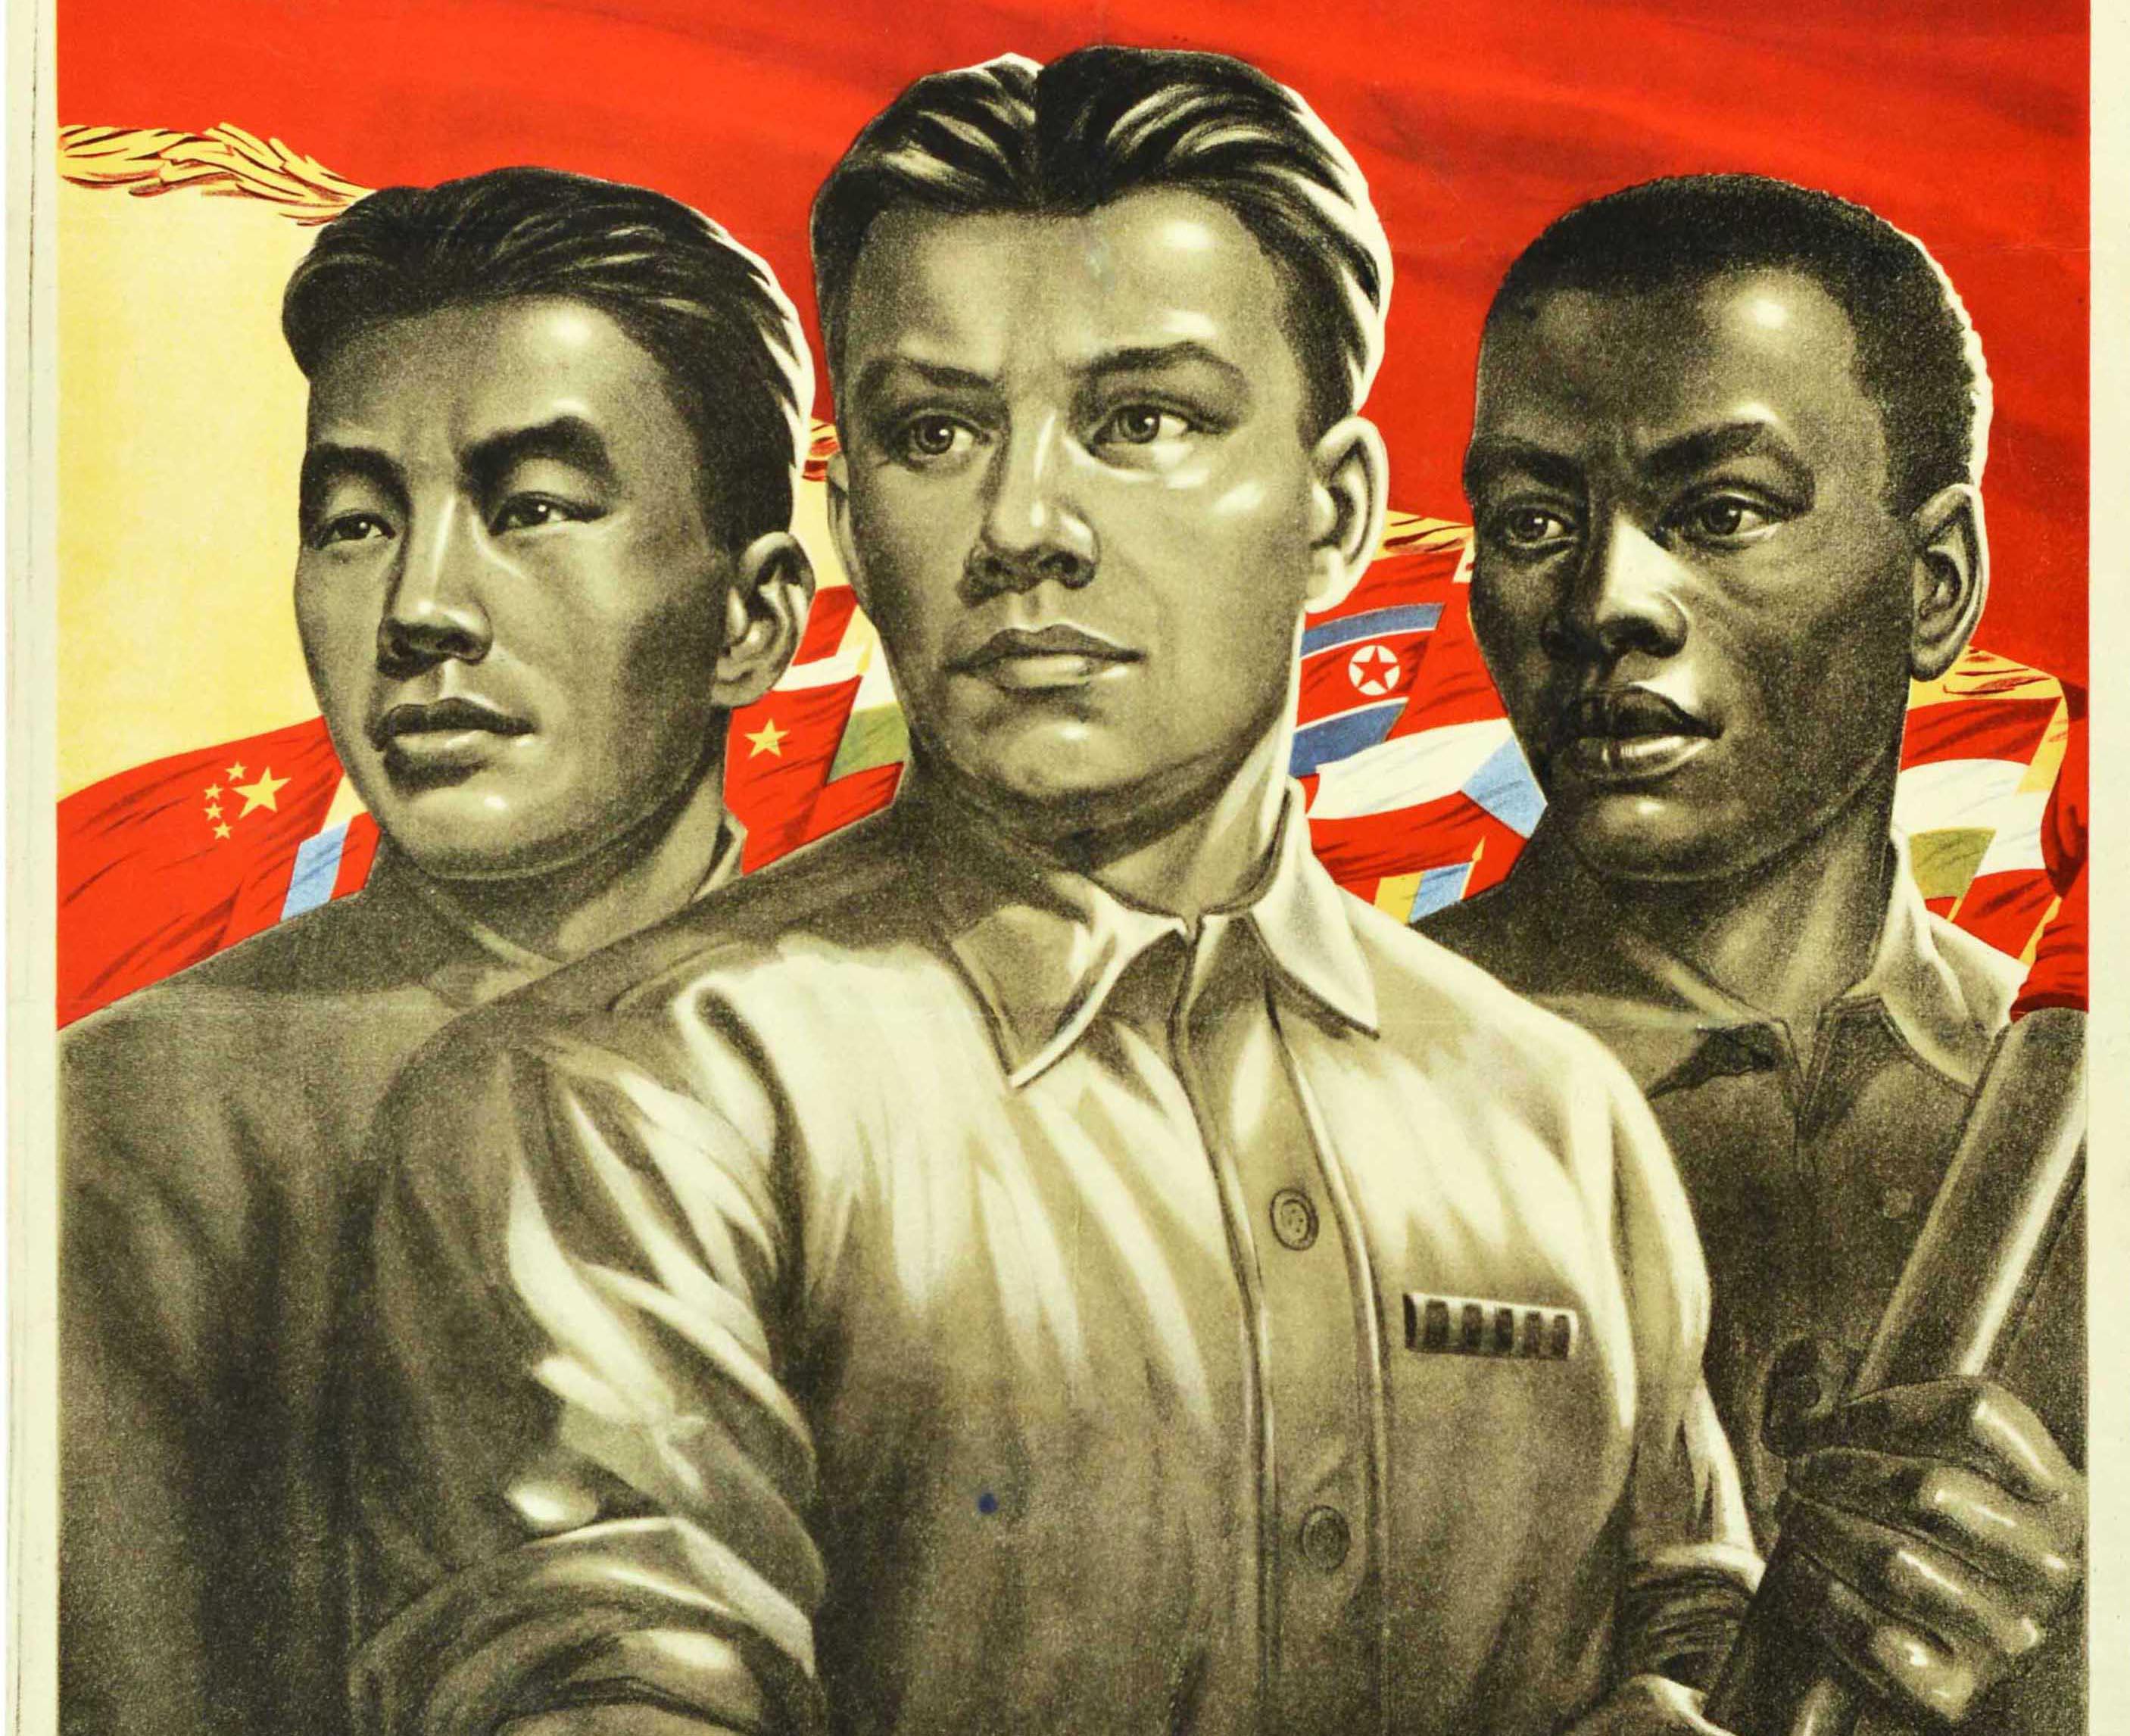 Original Vintage Soviet Propaganda Poster Nations For Peace Communist USSR - Print by Maxim Gleikh